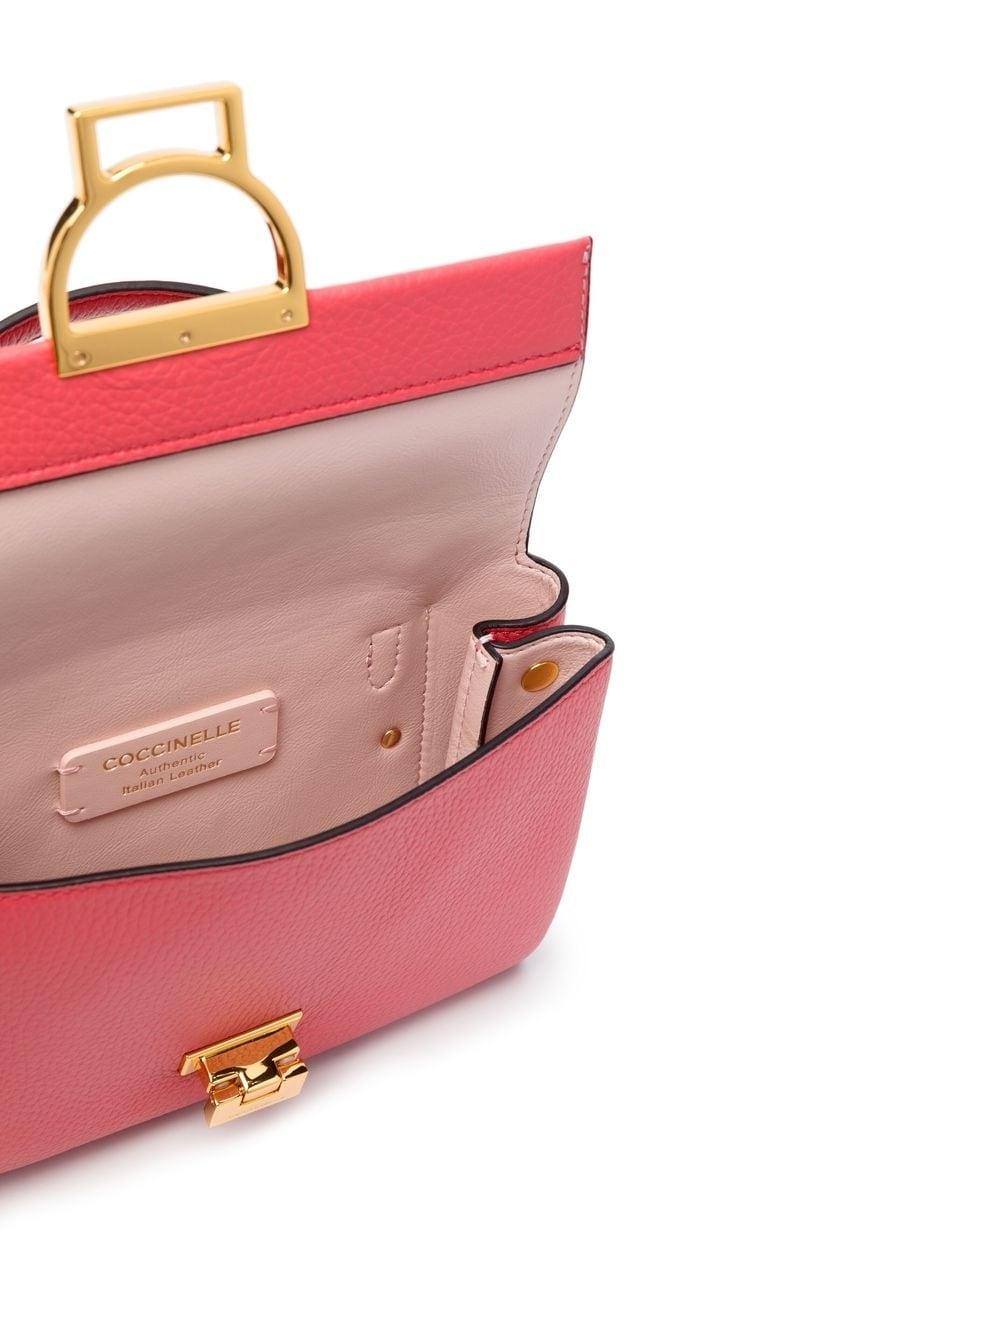 Coccinelle Arlettis Leather Shoulder Bag in Pink | Lyst